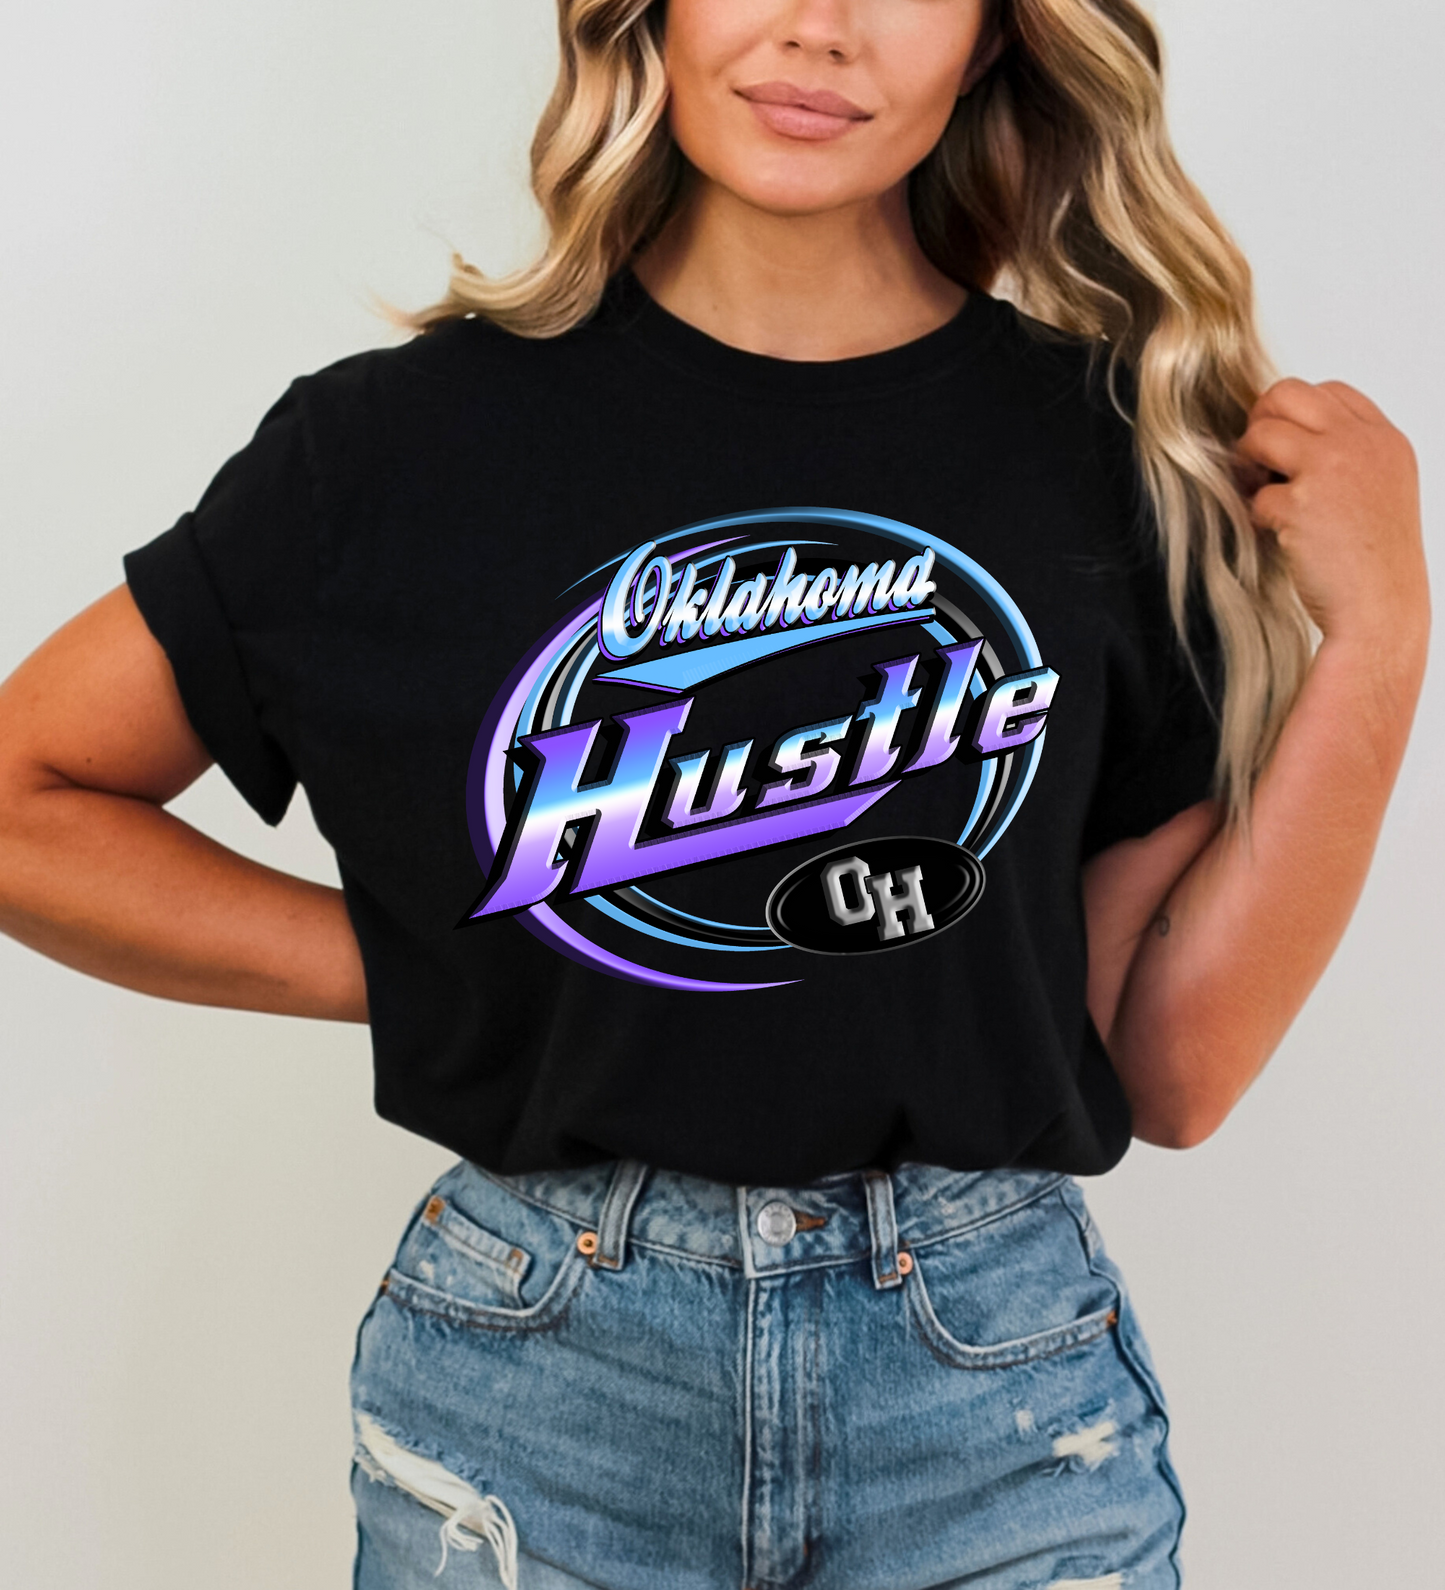 Oklahoma Hustle "dad logo" (Gildan)